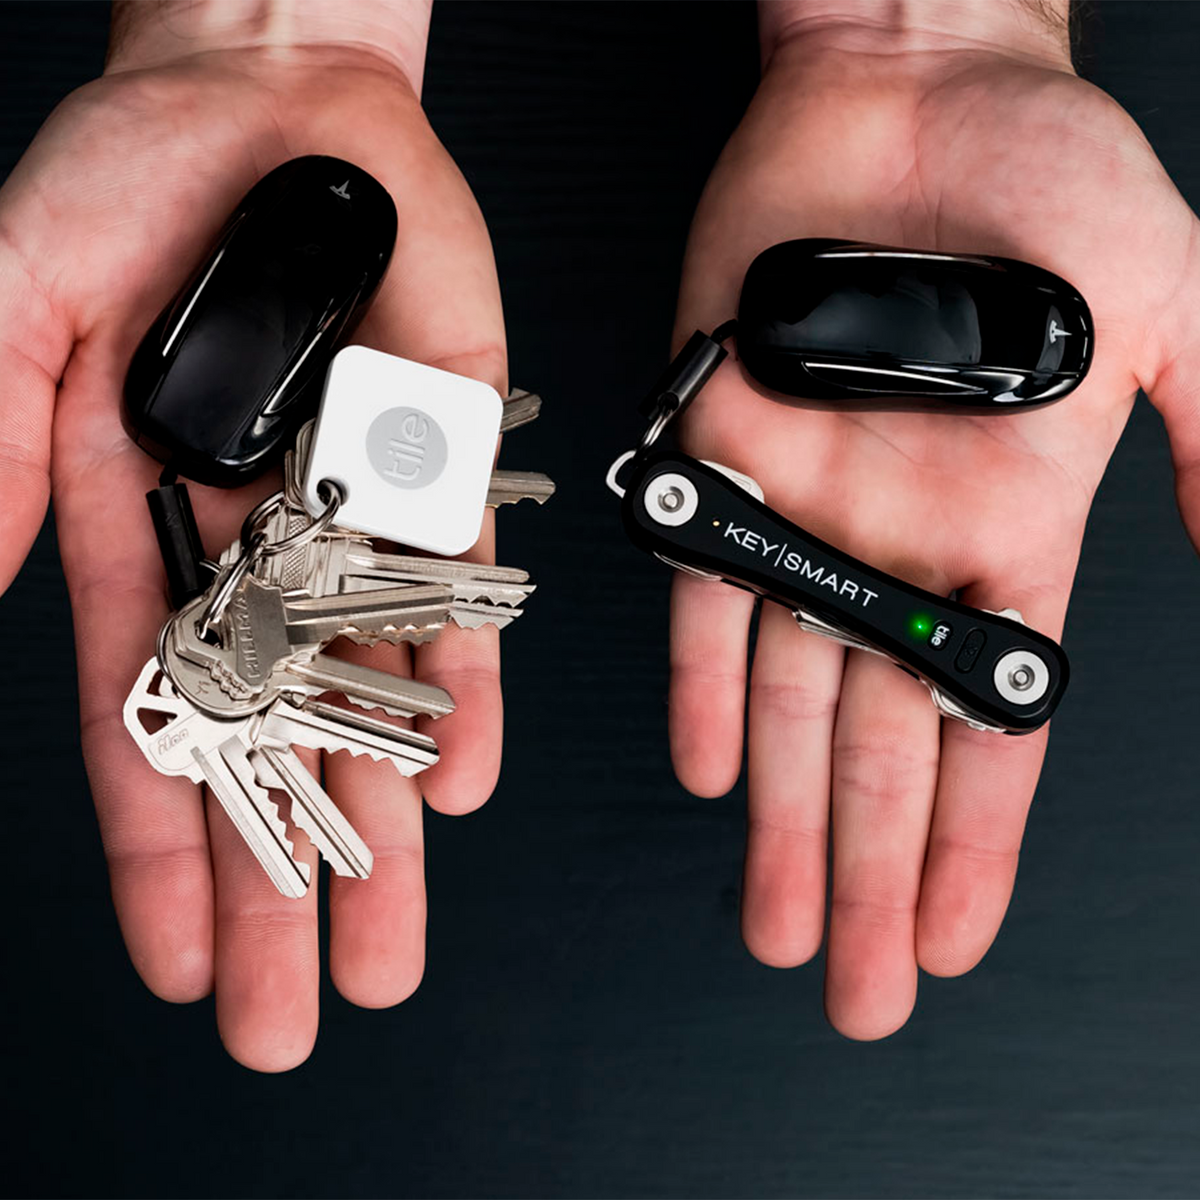 KeySmart Flex Key Holder - Key Organizer Key Chain, Compact Key Case  Pocket-Sized EDC Keychain, Key Ring Loop for Car Keys